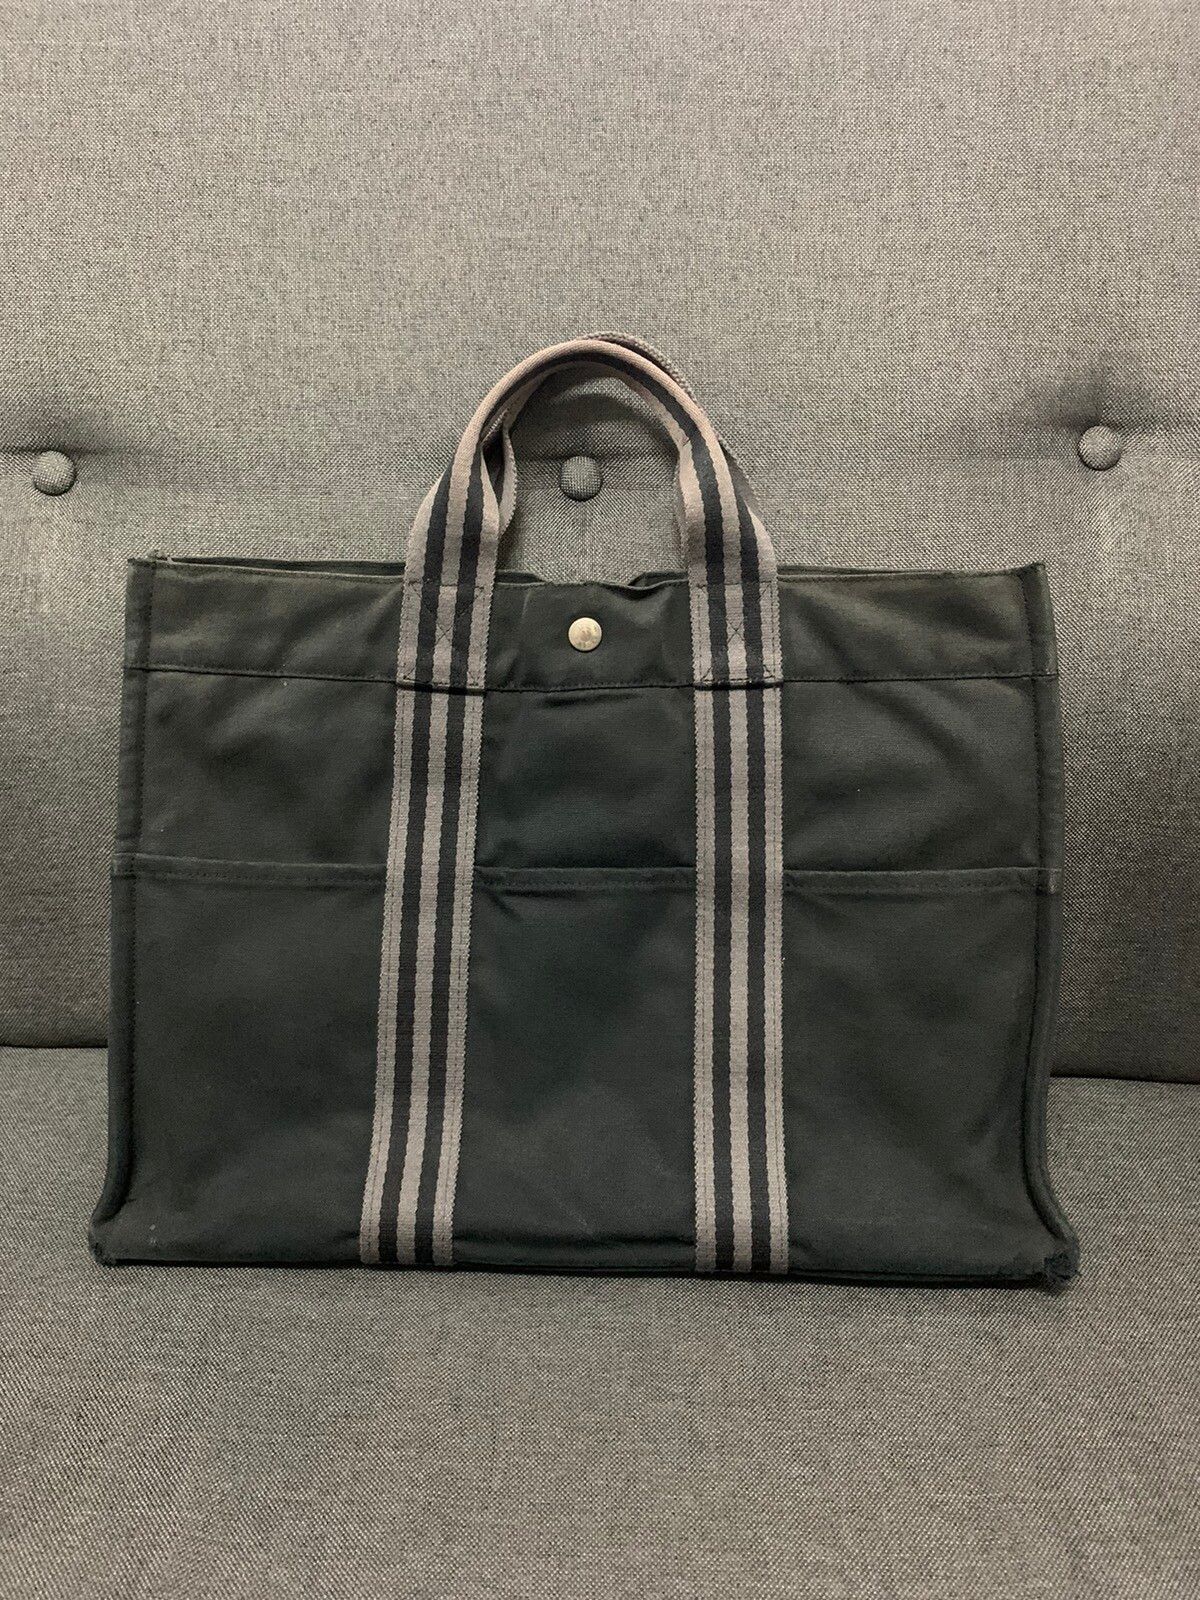 Vintage Faded Distressed Hermes Bag Tote bag - 1